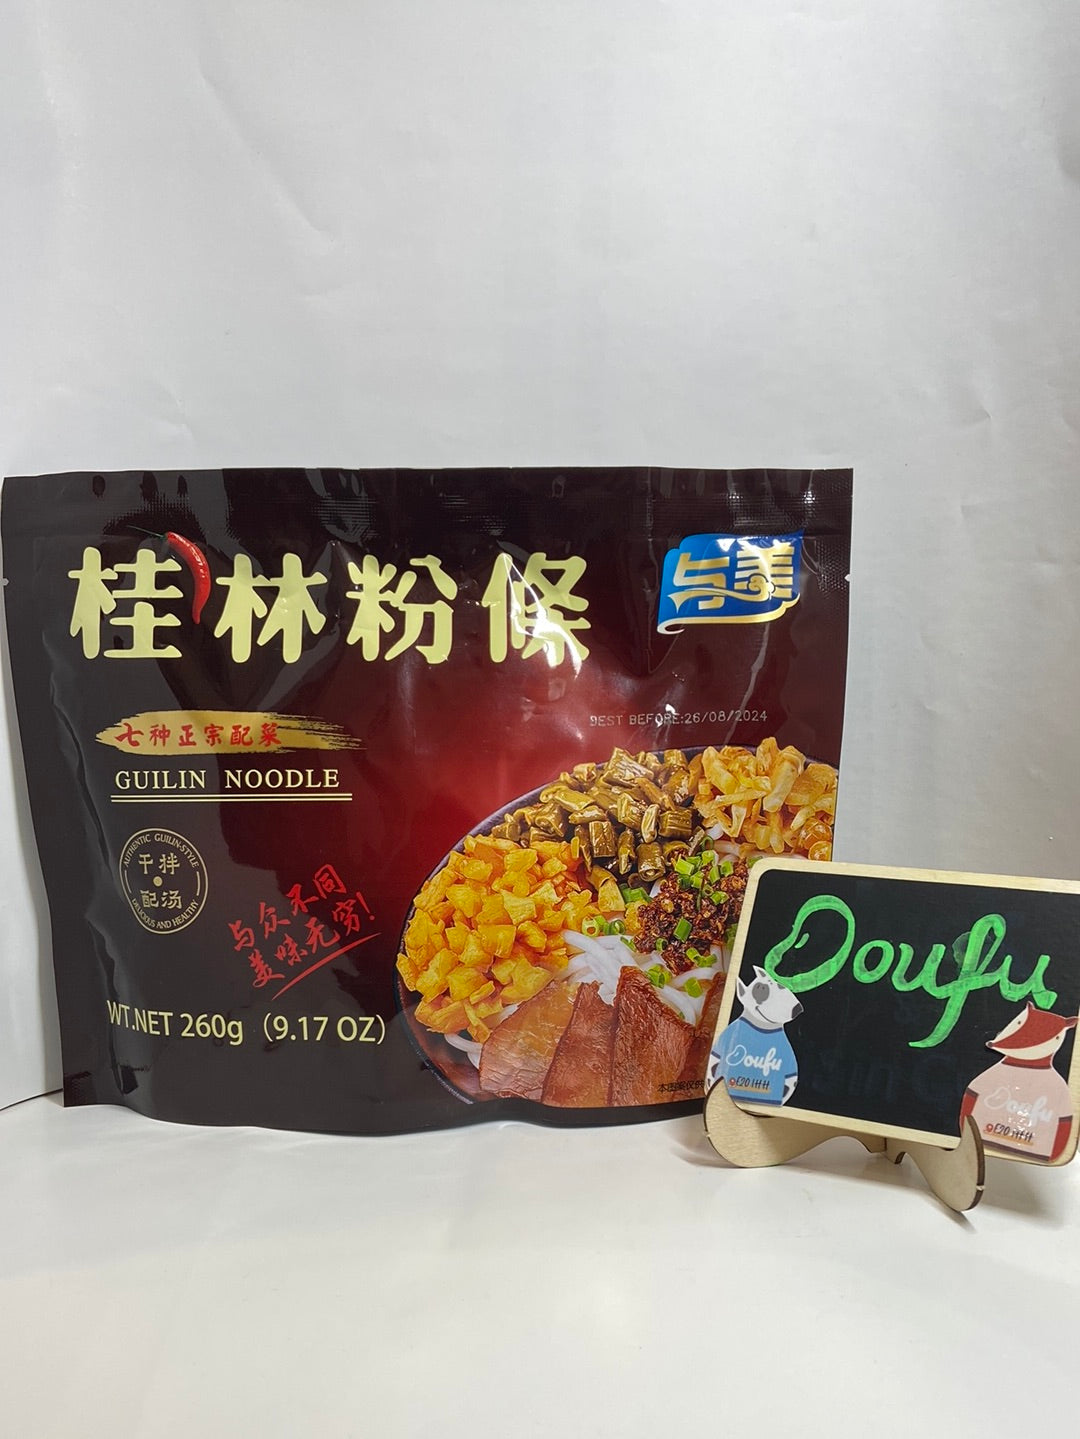 Yumei guilin noodles 与美桂林粉条 260g